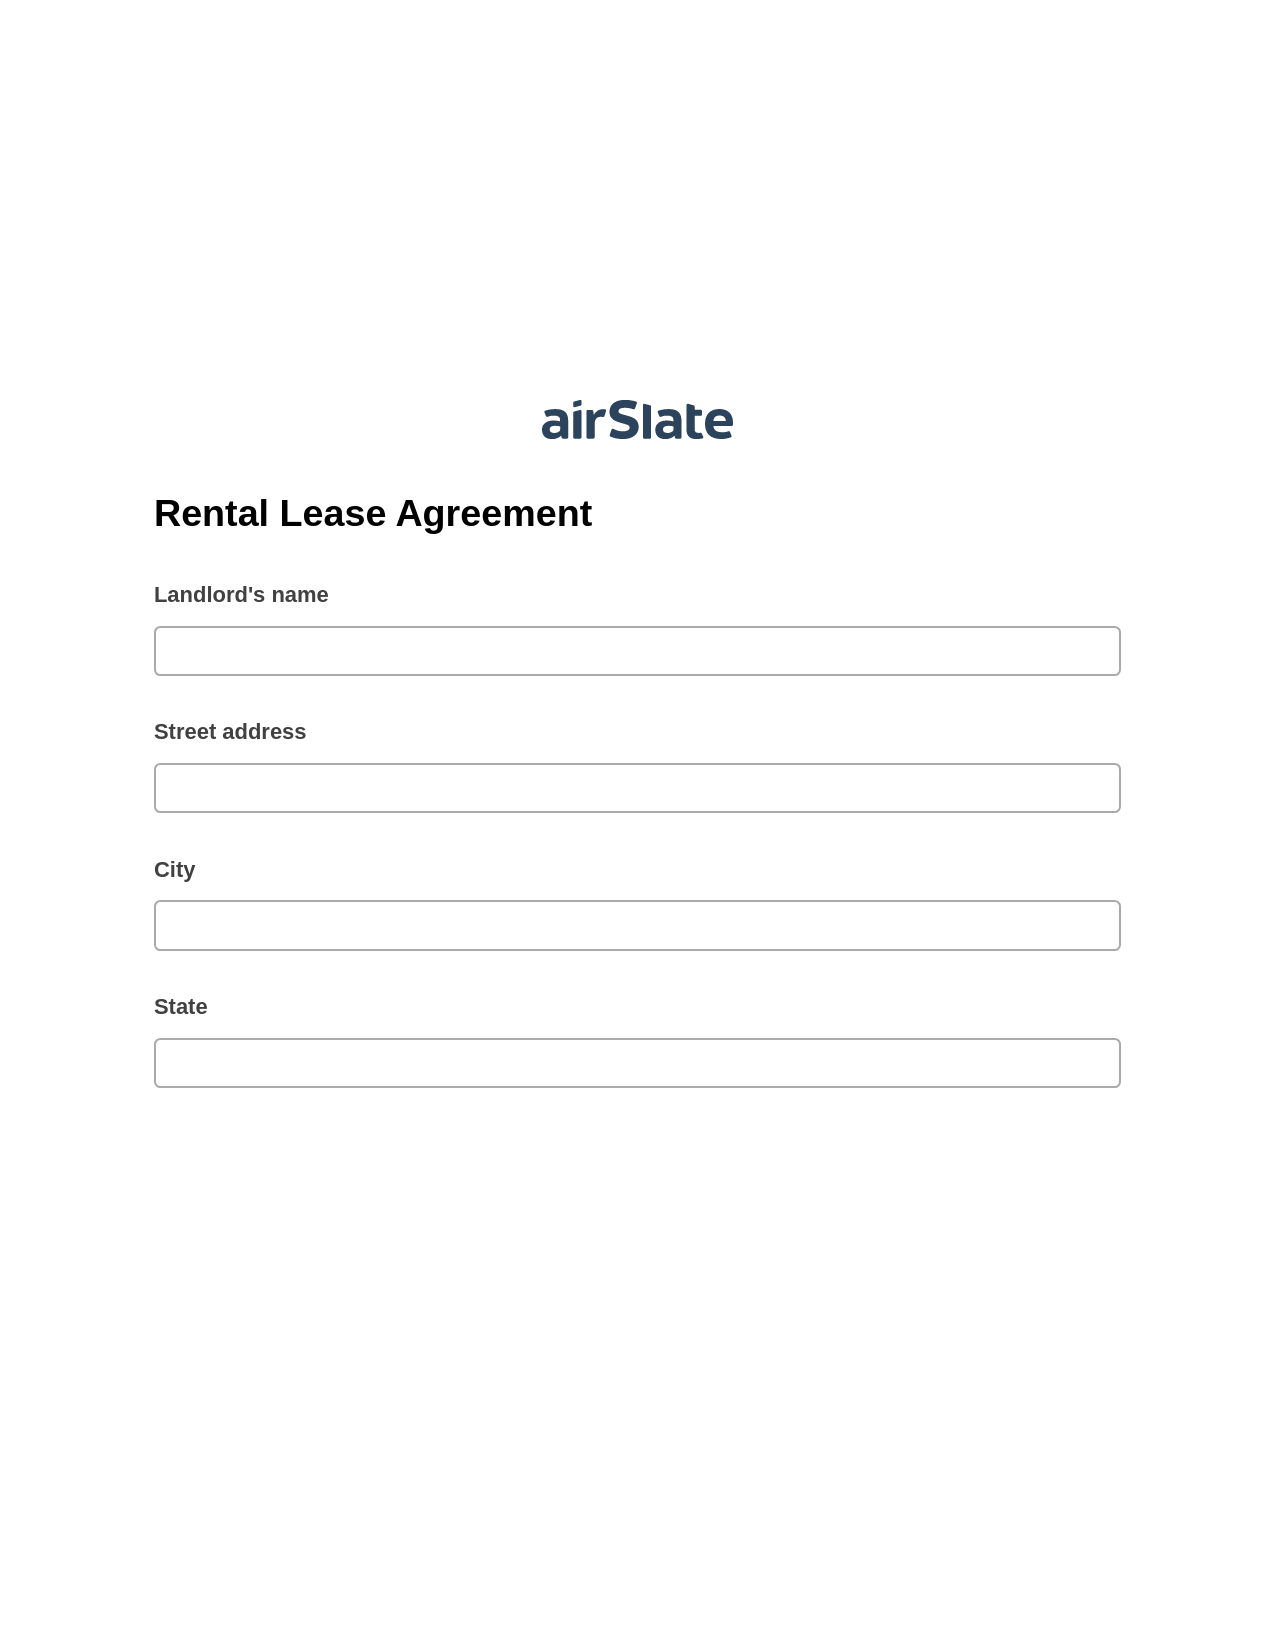 Rental Lease Agreement Pre-fill from Google Sheets Bot, Google Sheet Two-Way Binding Bot, Email Notification Postfinish Bot